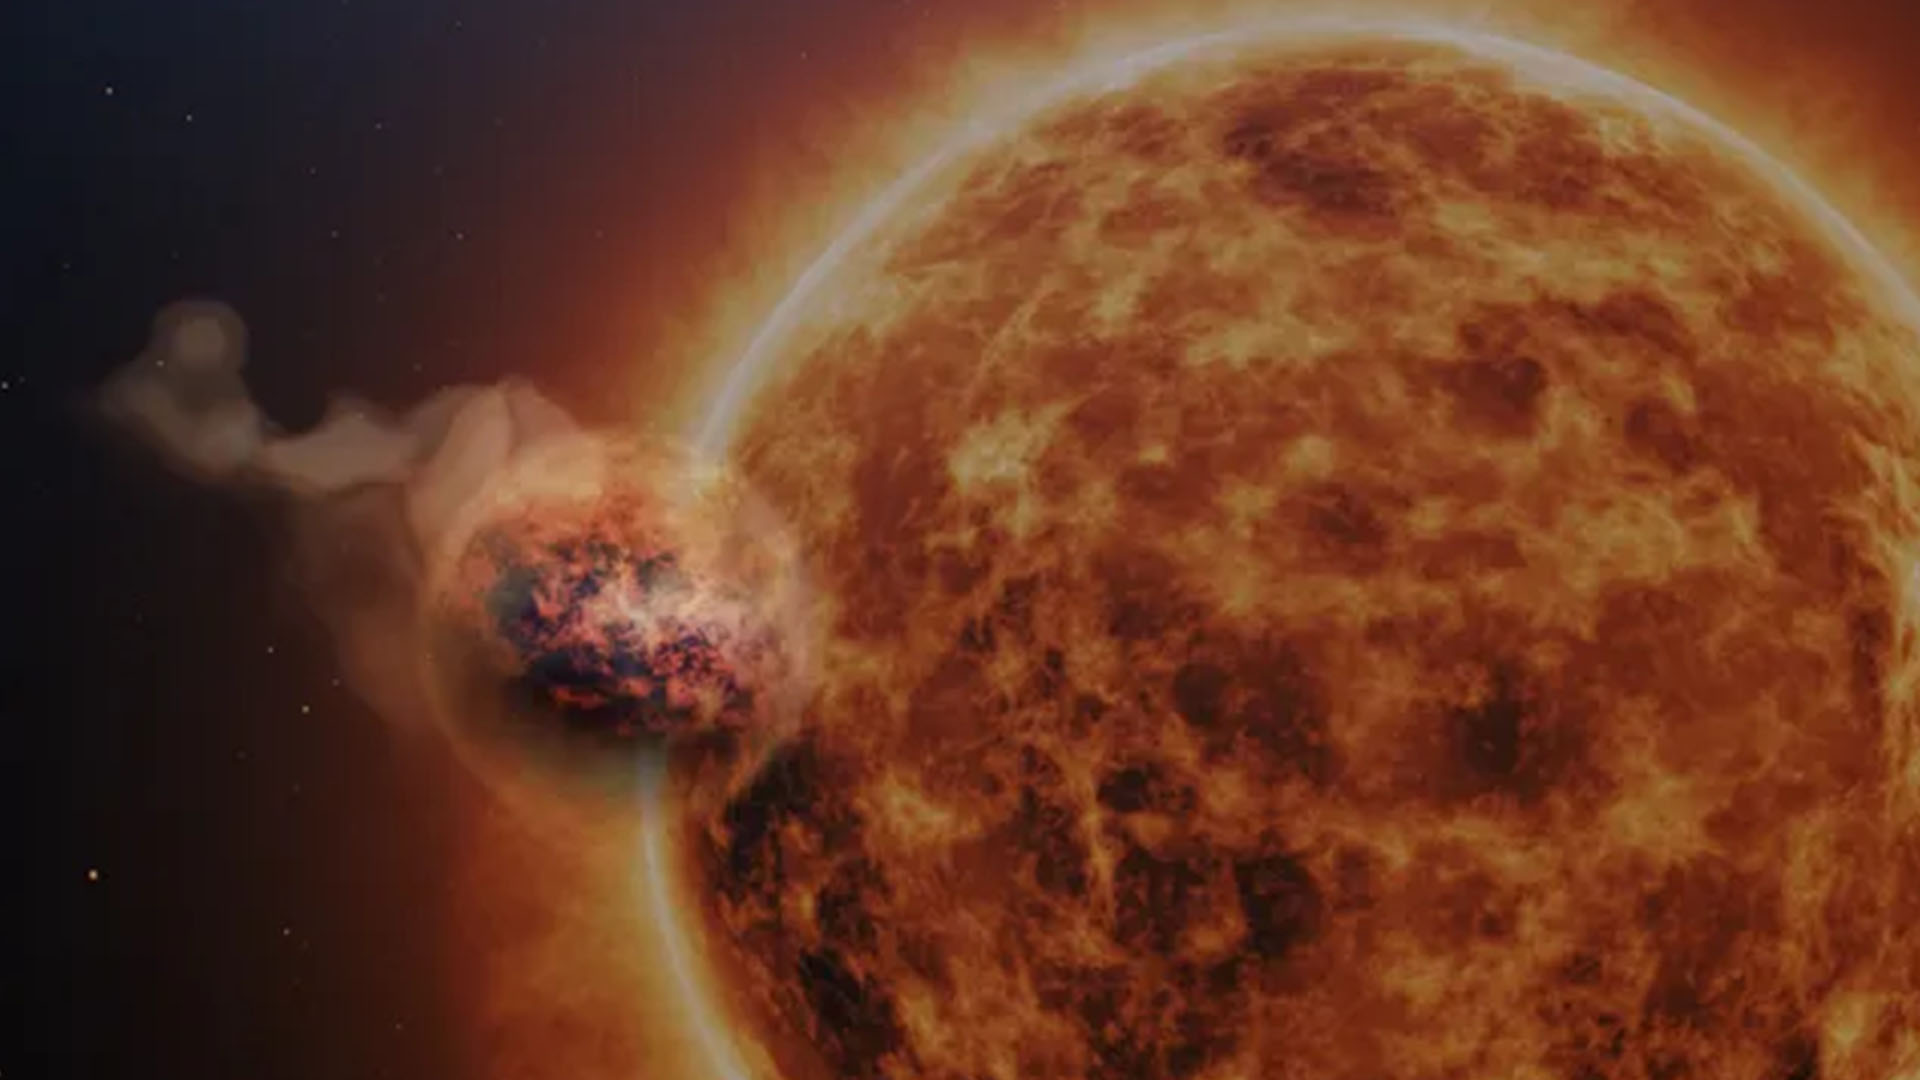 James Webb telescope detects 'fluffy' alien planet that rains sand